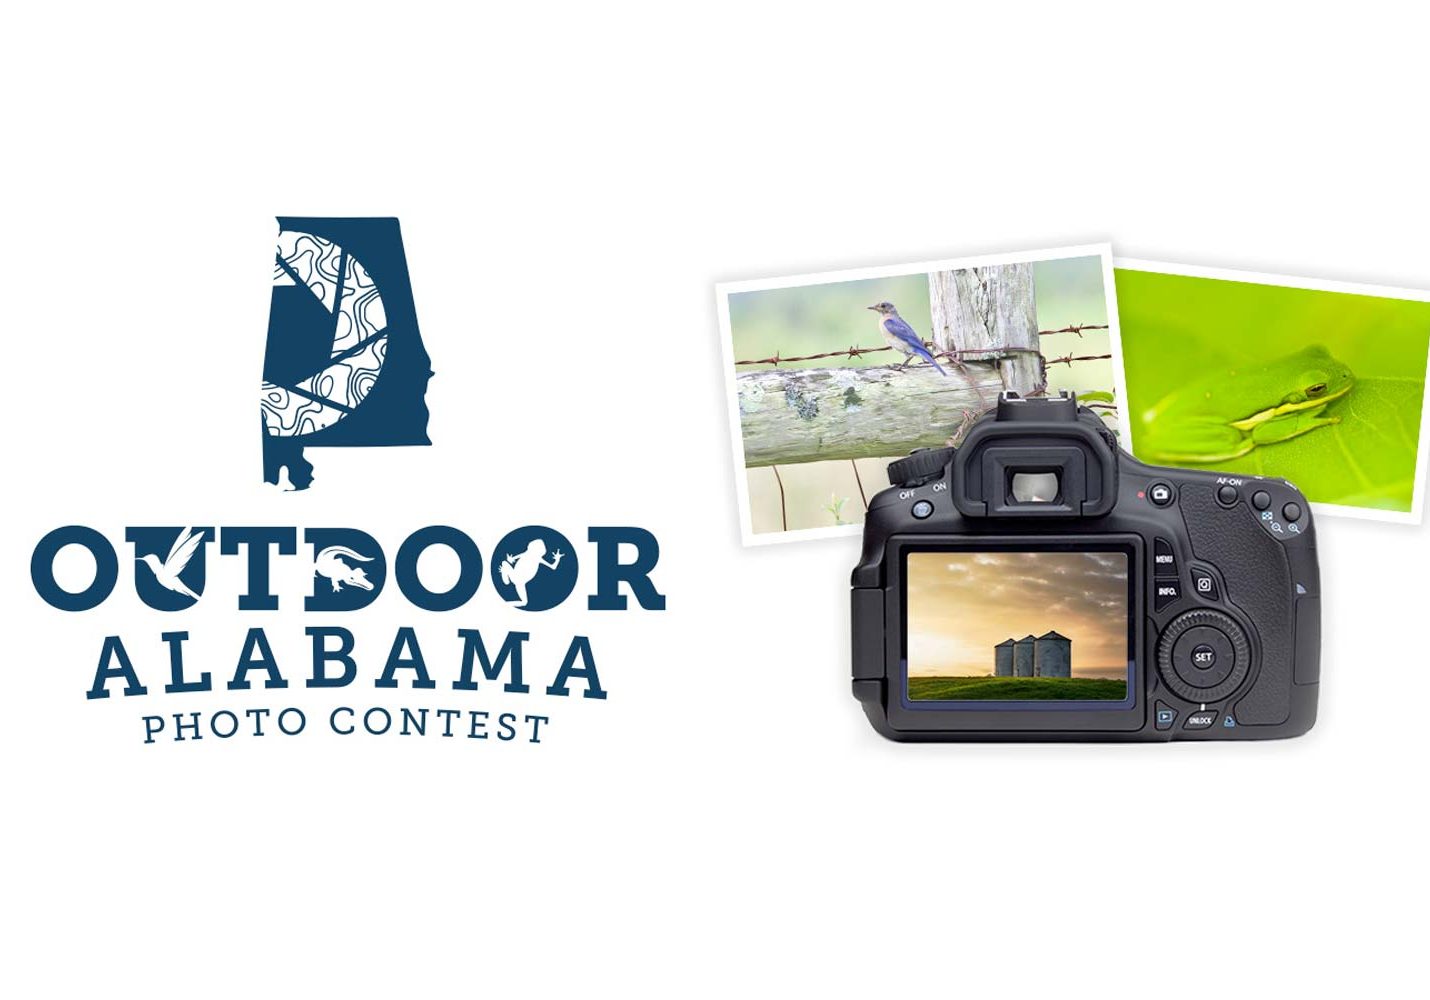 Outdoor Alabama Photo Contest Opens Soon